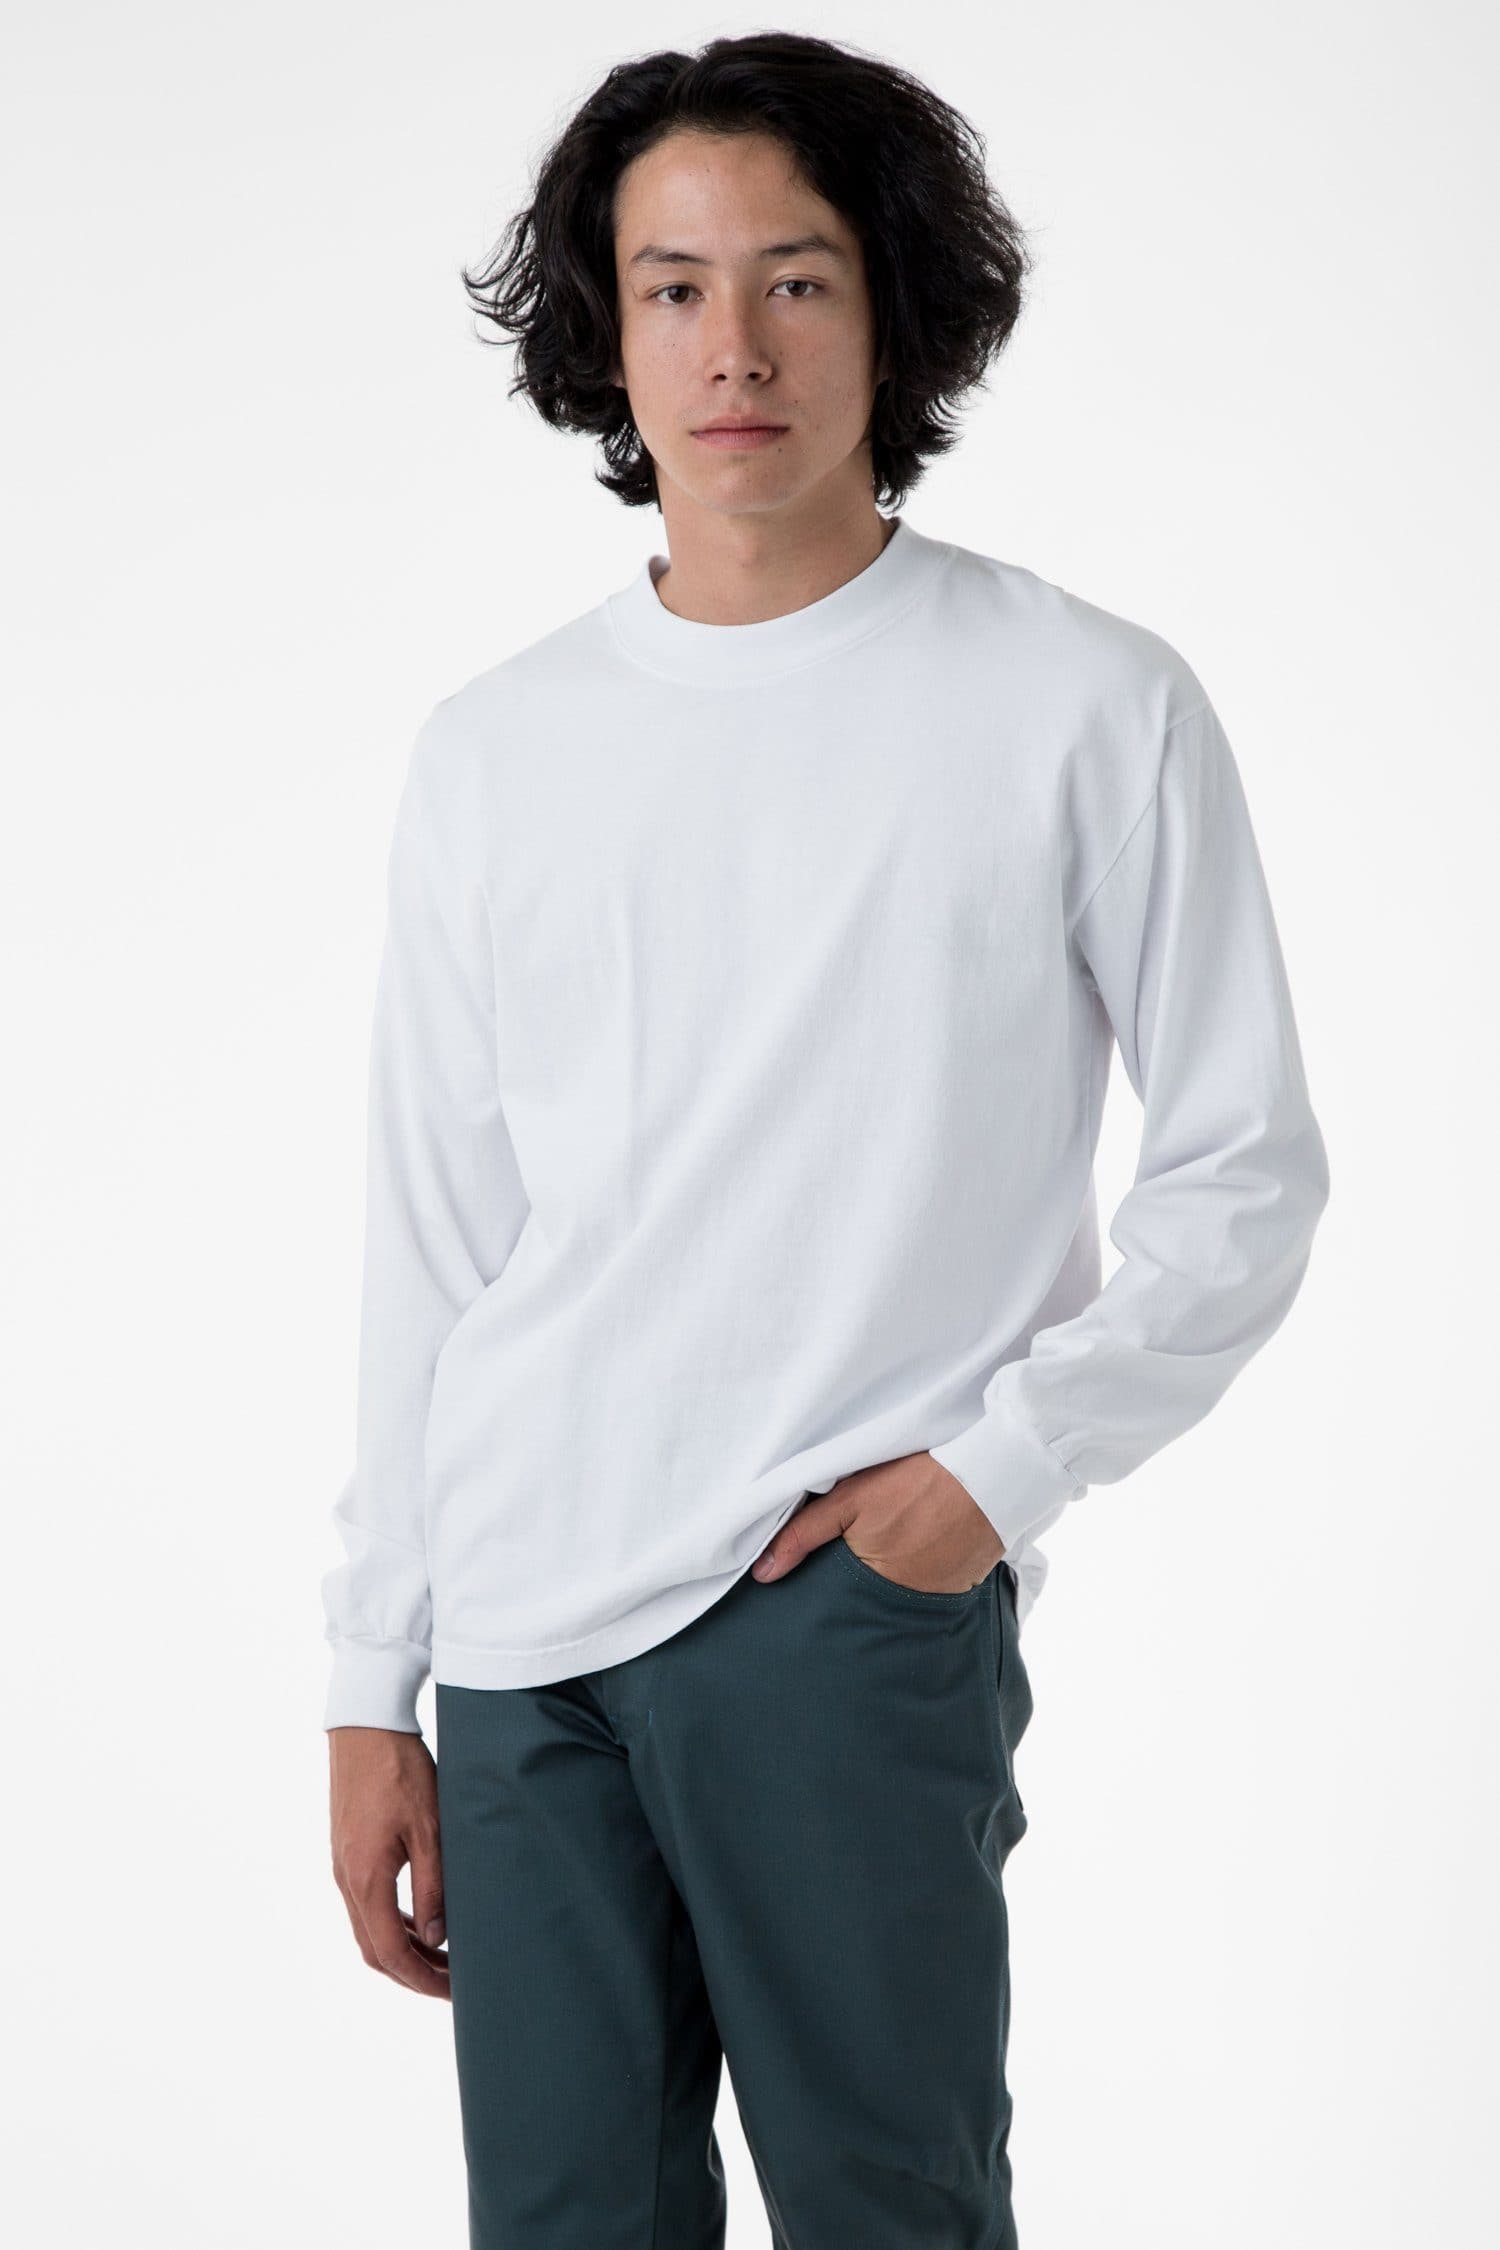 Los Angeles Print Long sleeve Cotton T-shirt – xroder